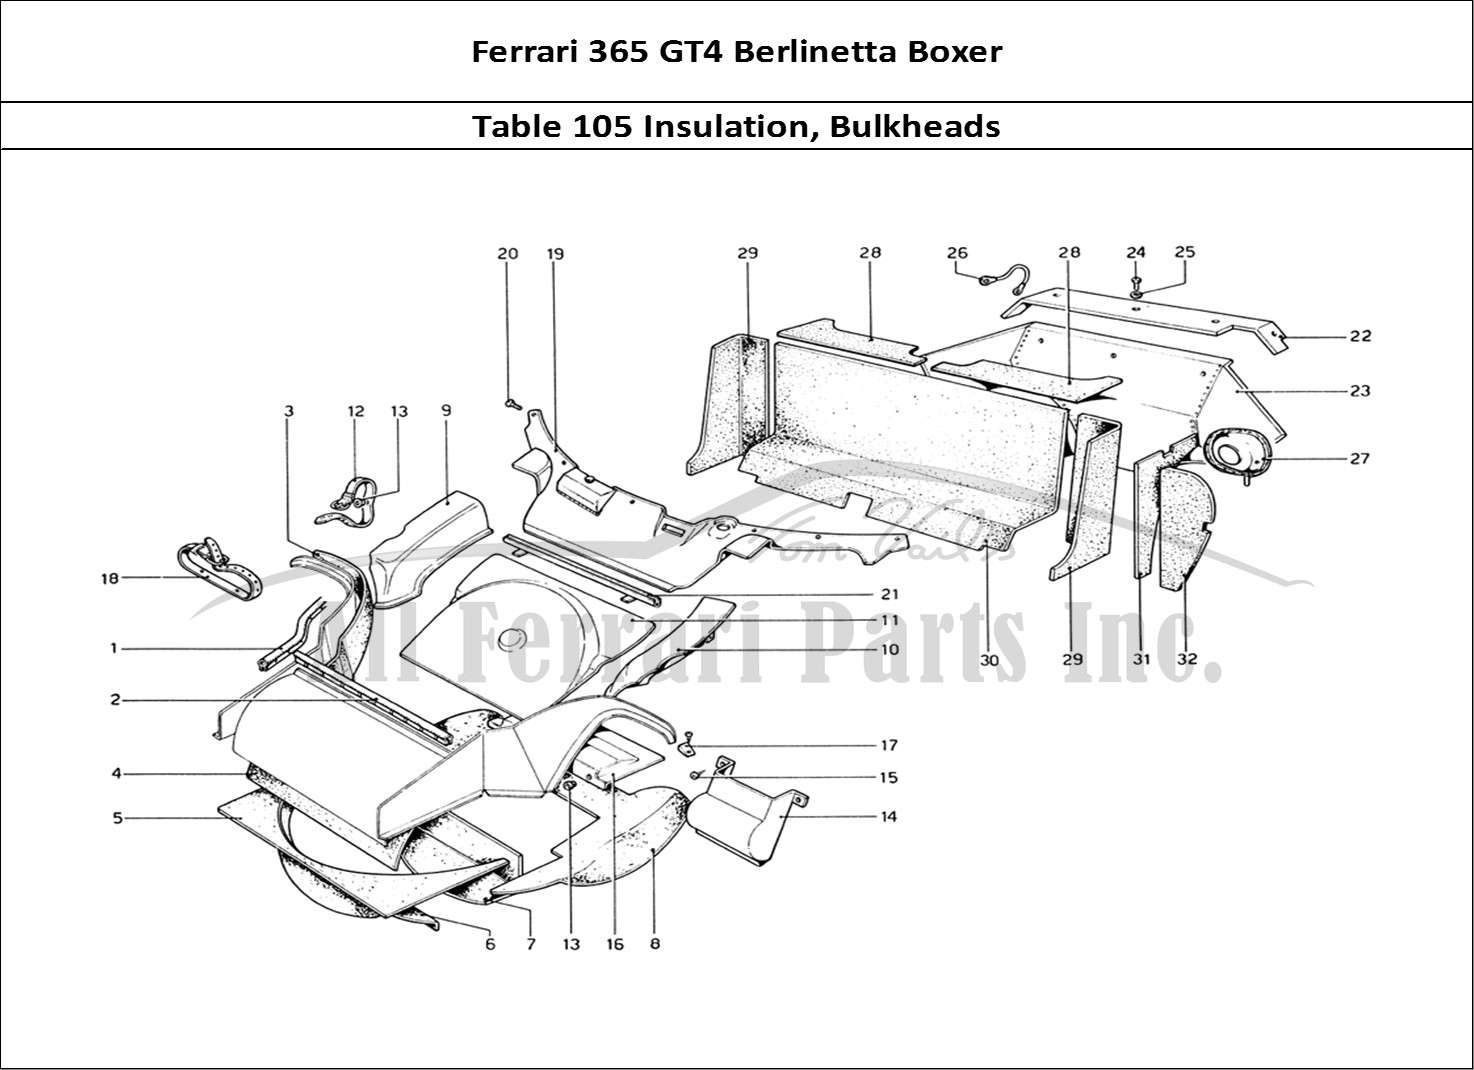 Ferrari Parts Ferrari 365 GT4 Berlinetta Boxer Page 105 Insulating Material and B